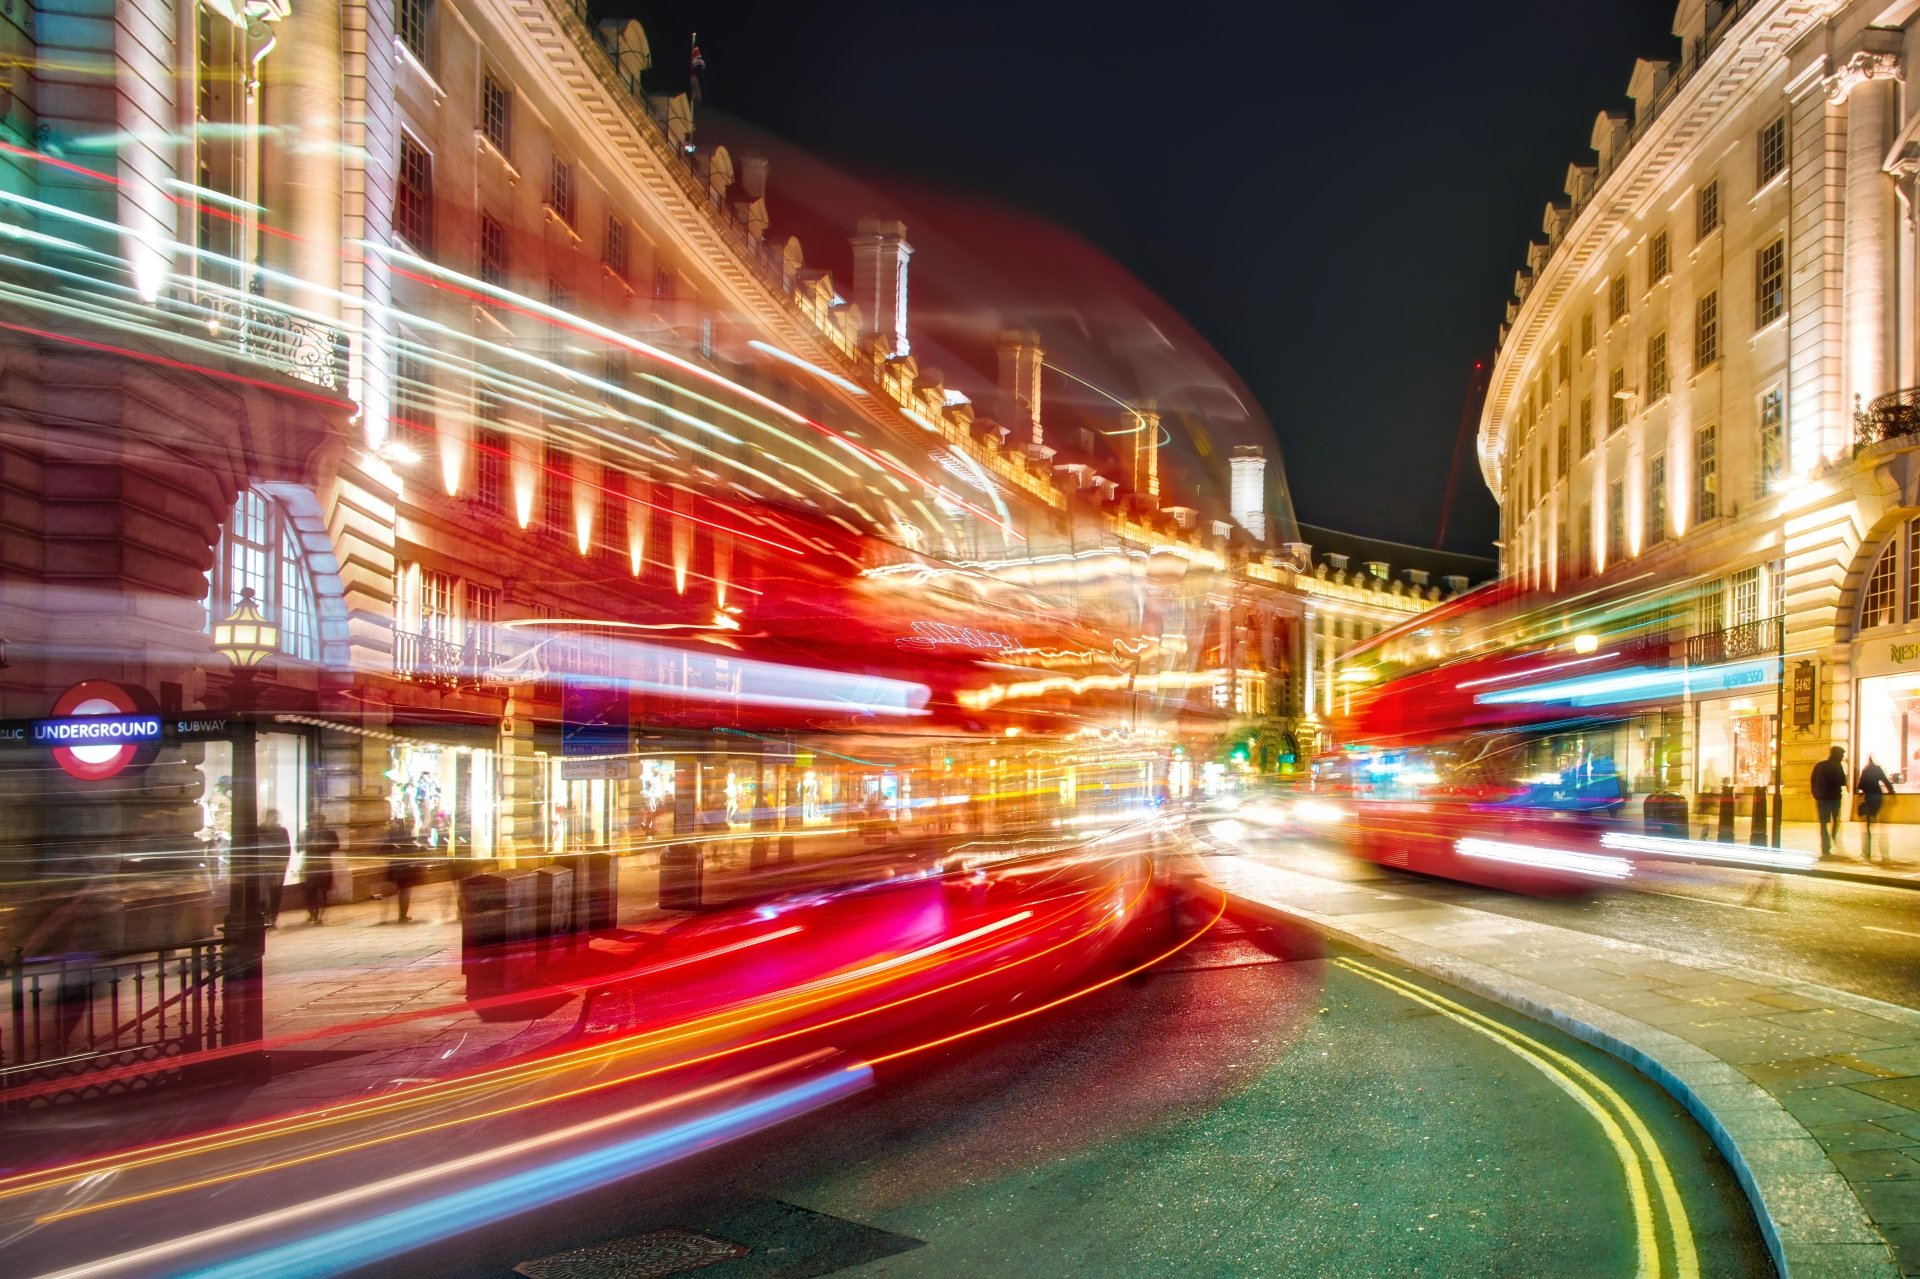 Download Night Motion Blur Street London Vehicle Bus 4k Ultra HD Wallpaper